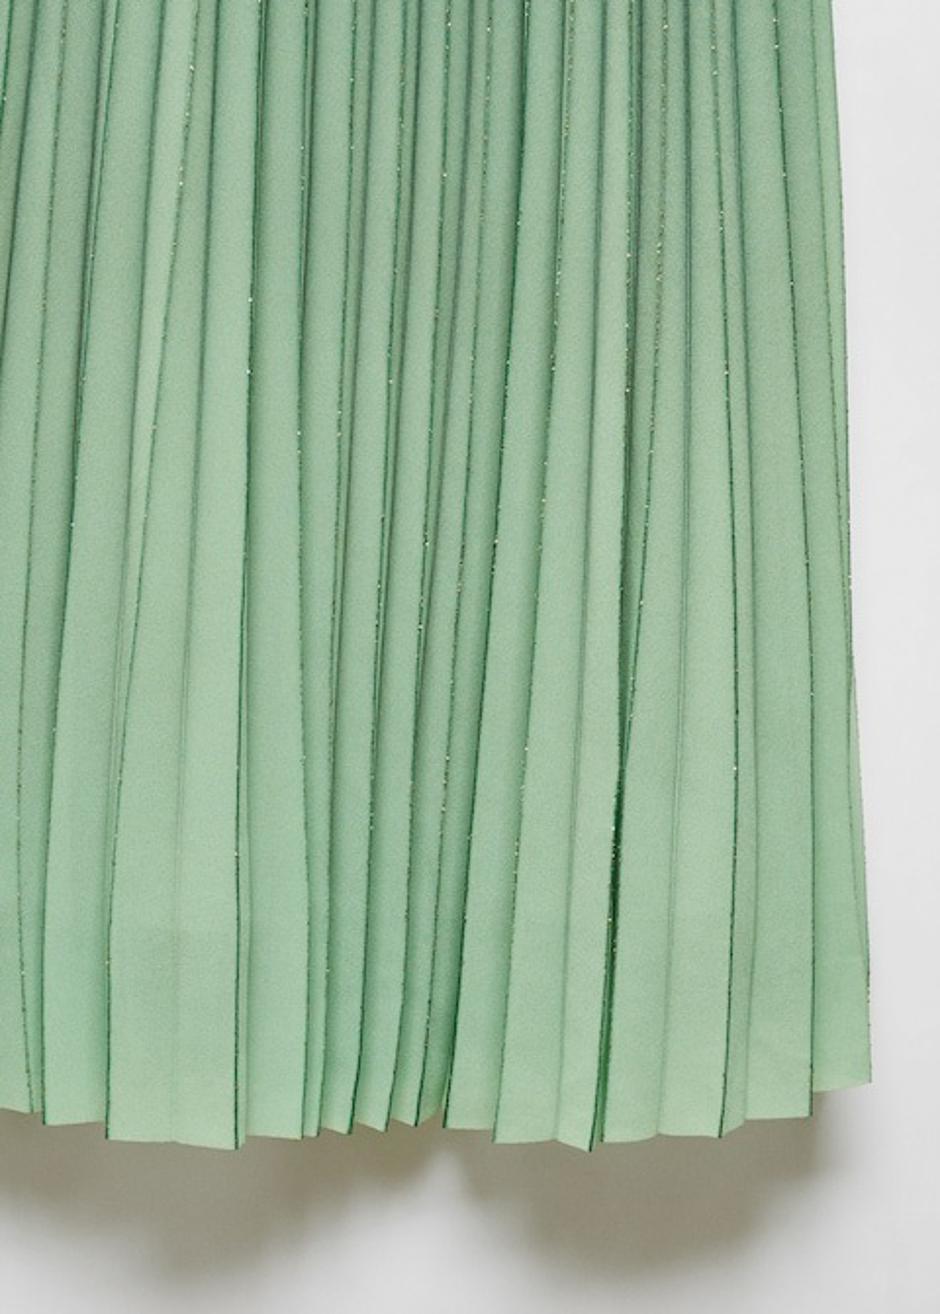 Foto: Mango, zelena plisirana ombre suknja | Autor: Mango